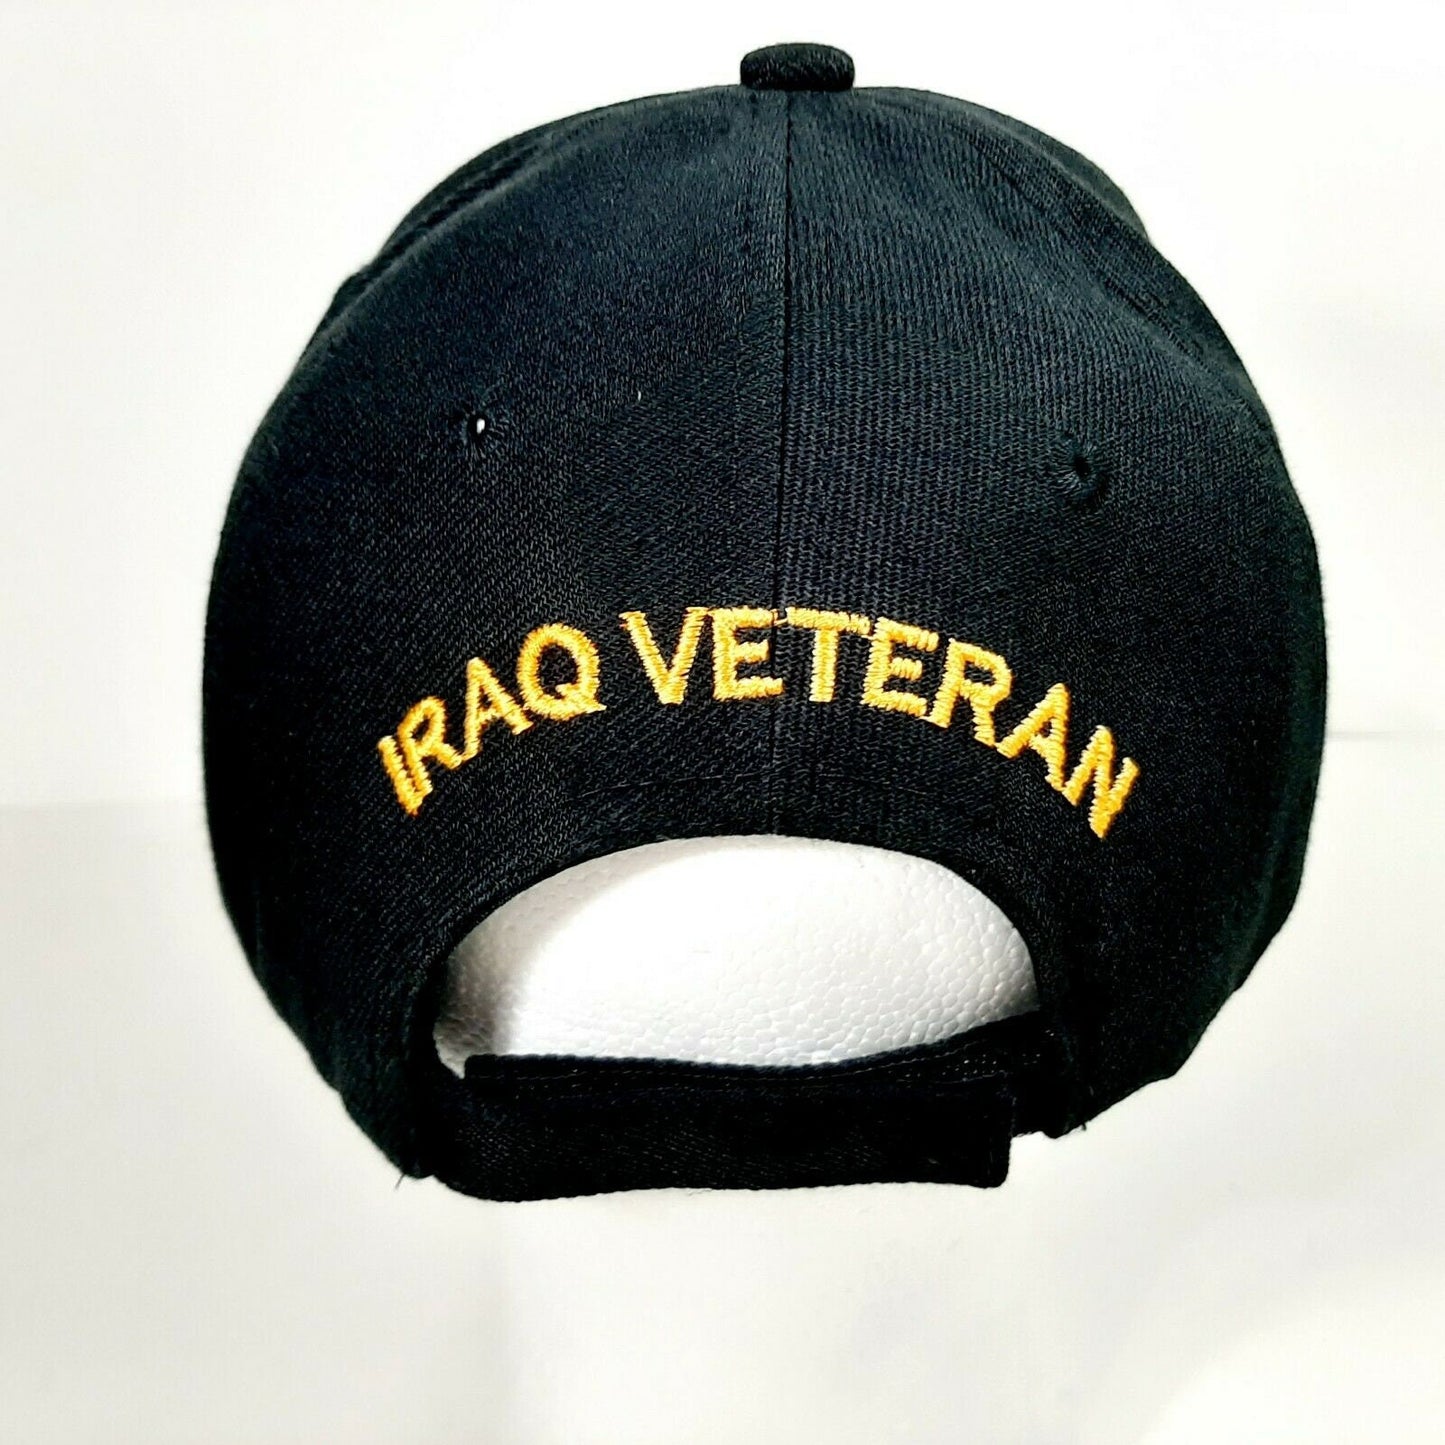 Iraq Veteran Mens Ball Cap Black Embroidered Acrylic